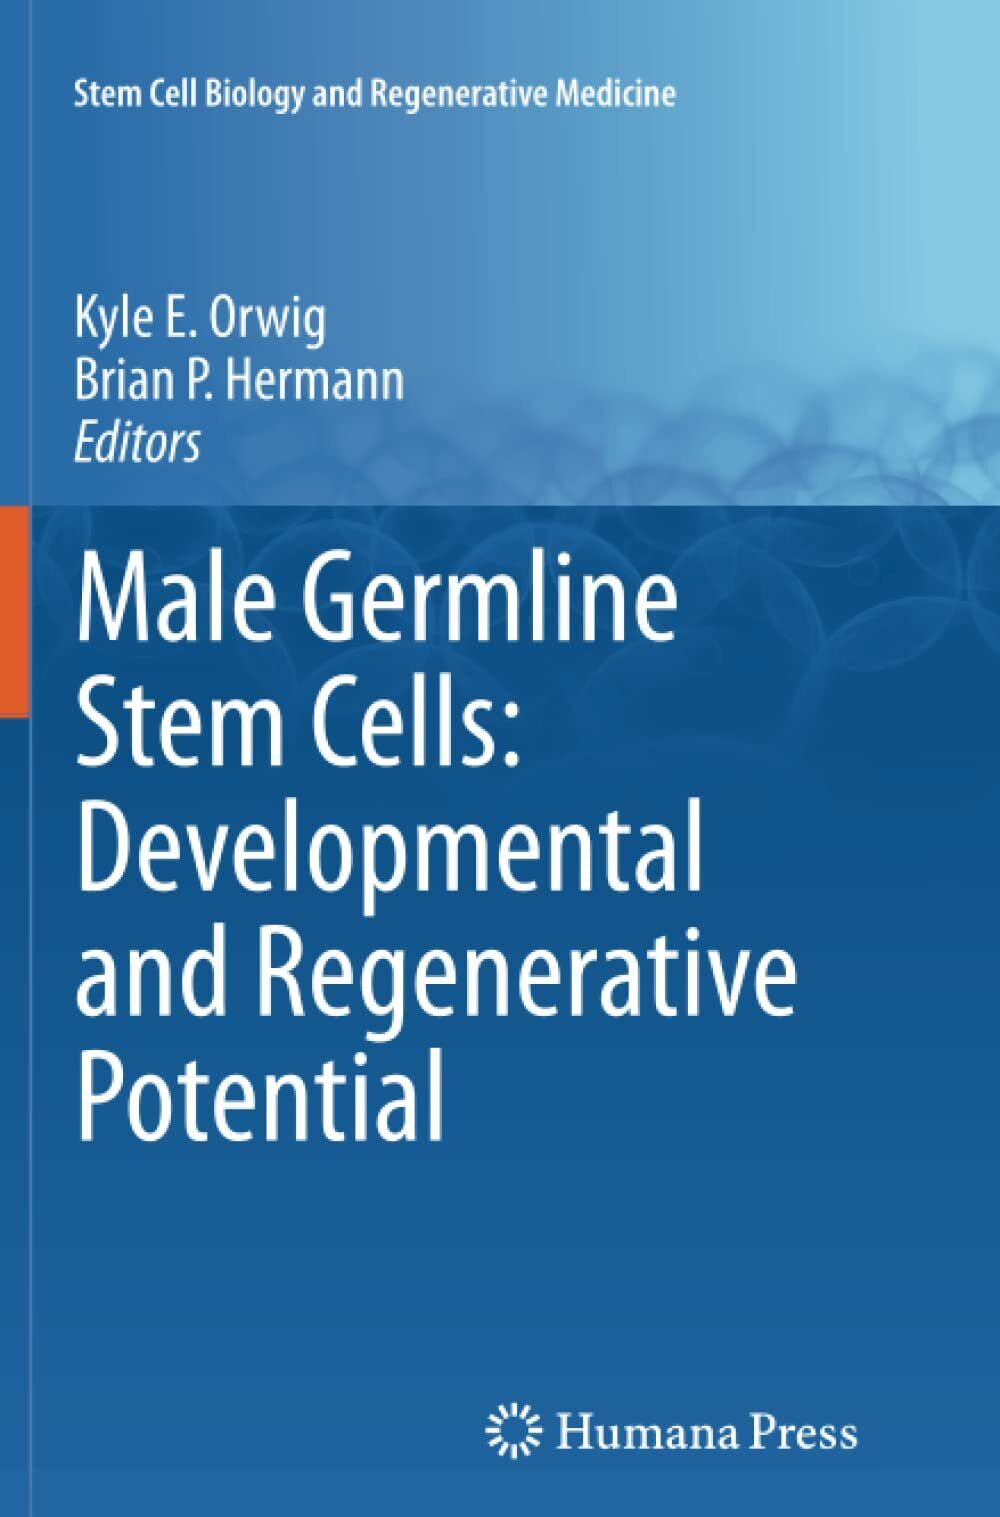 Male Germline Stem Cells: Developmental and Regenerative Potential -Humana, 2013